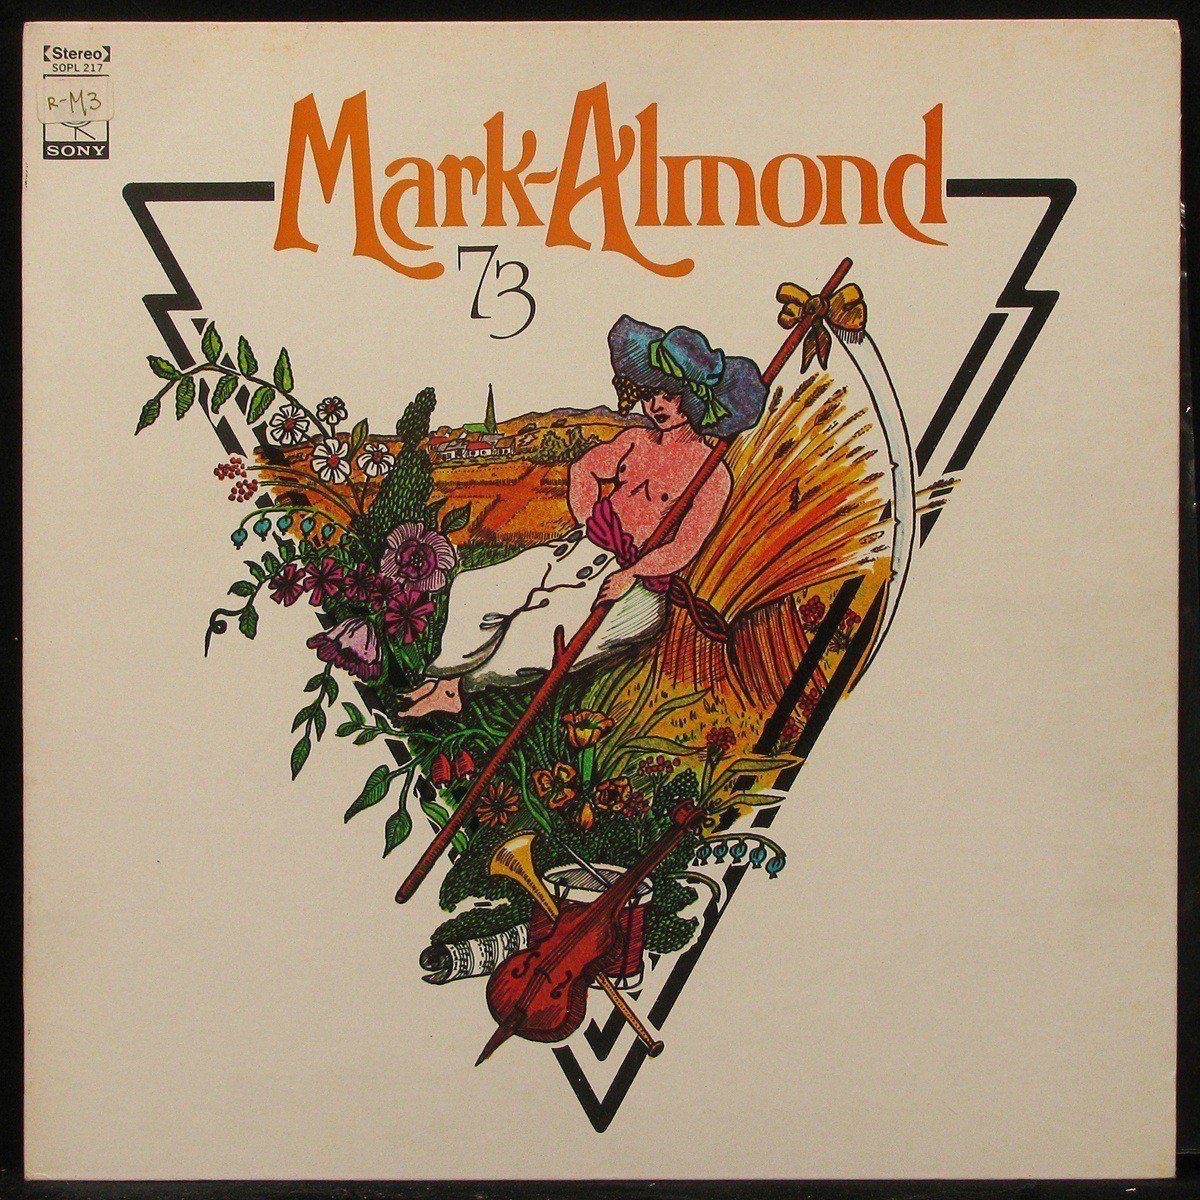 LP Mark-Almond — Mark-Almond 73 фото